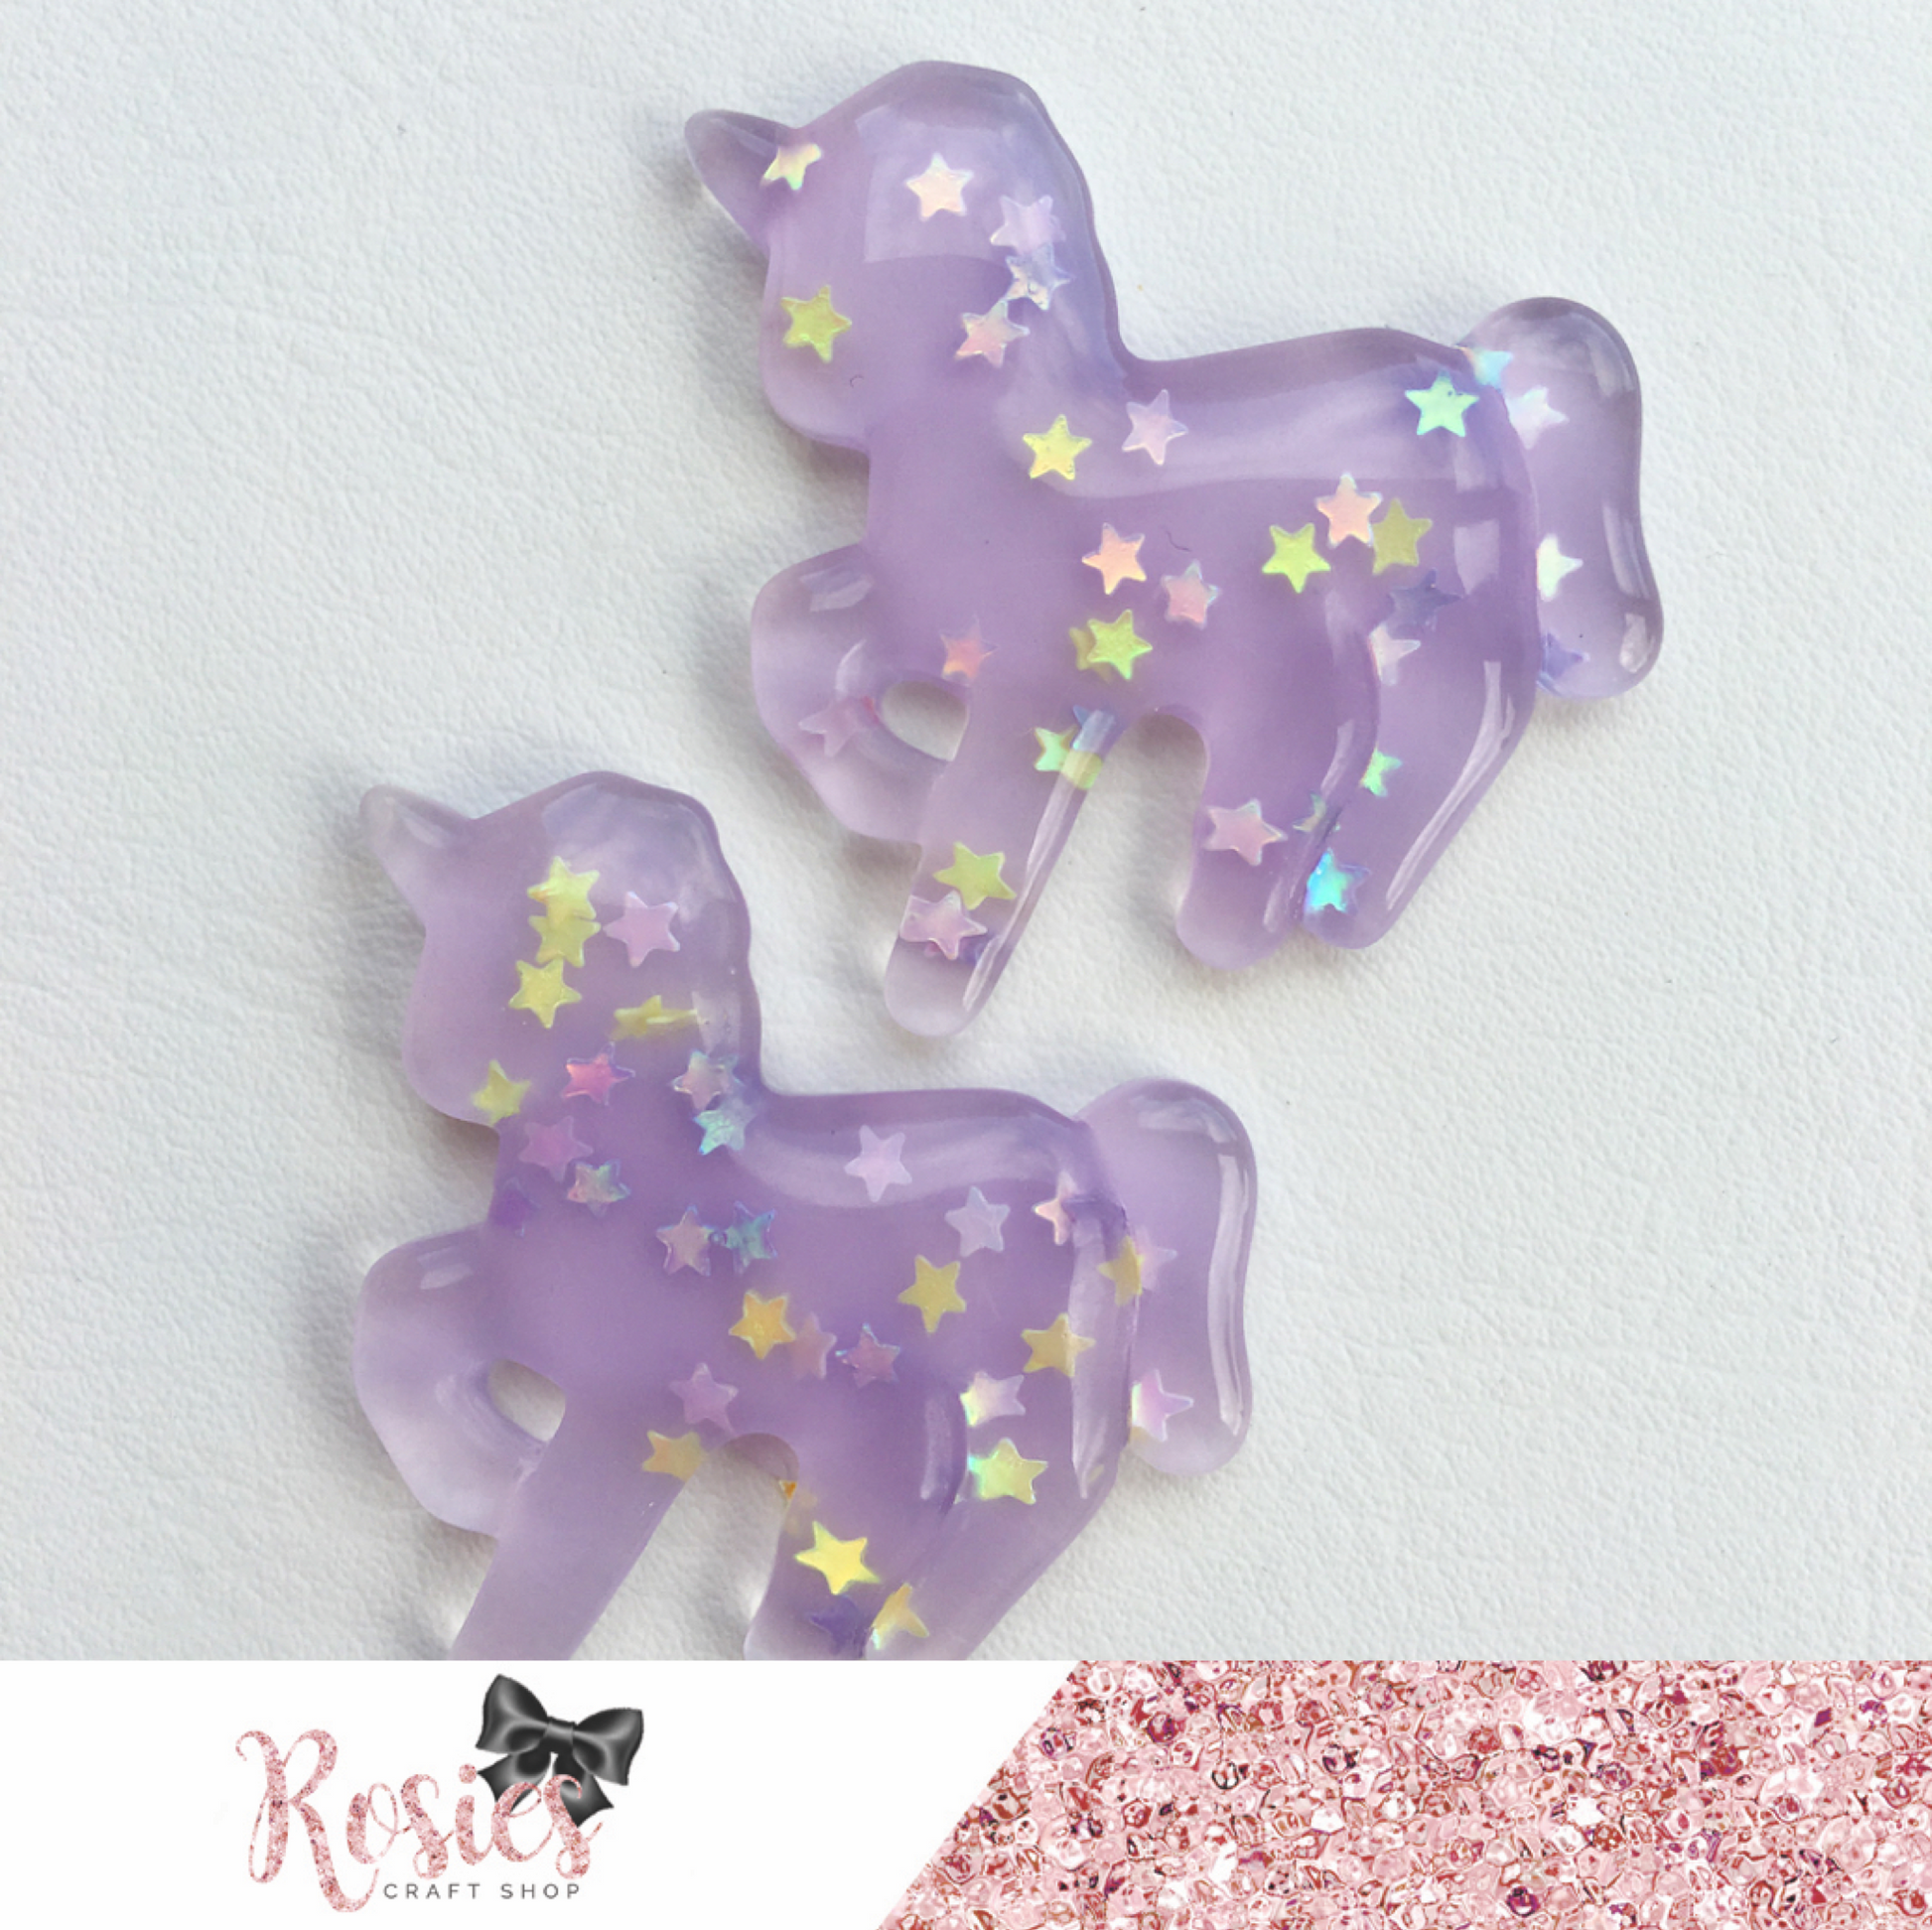 Lilac Unicorn with Stars Clear Flatbacked Resin Embellishment - Rosie's Craft Shop Ltd